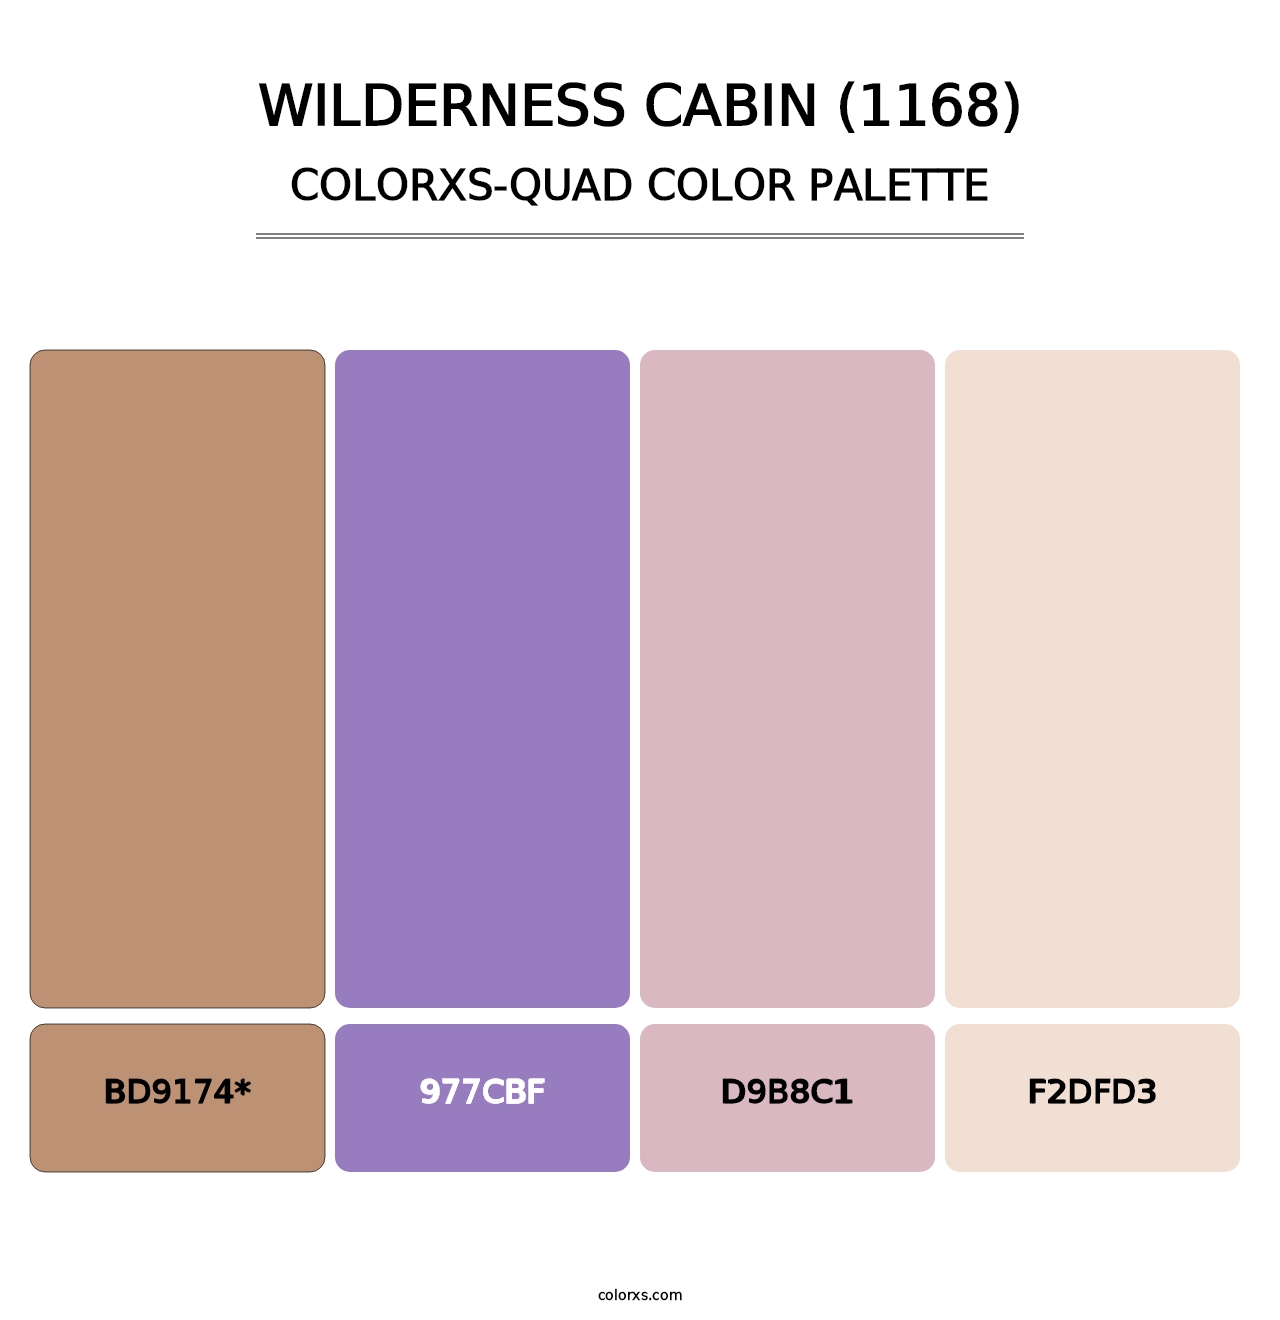 Wilderness Cabin (1168) - Colorxs Quad Palette